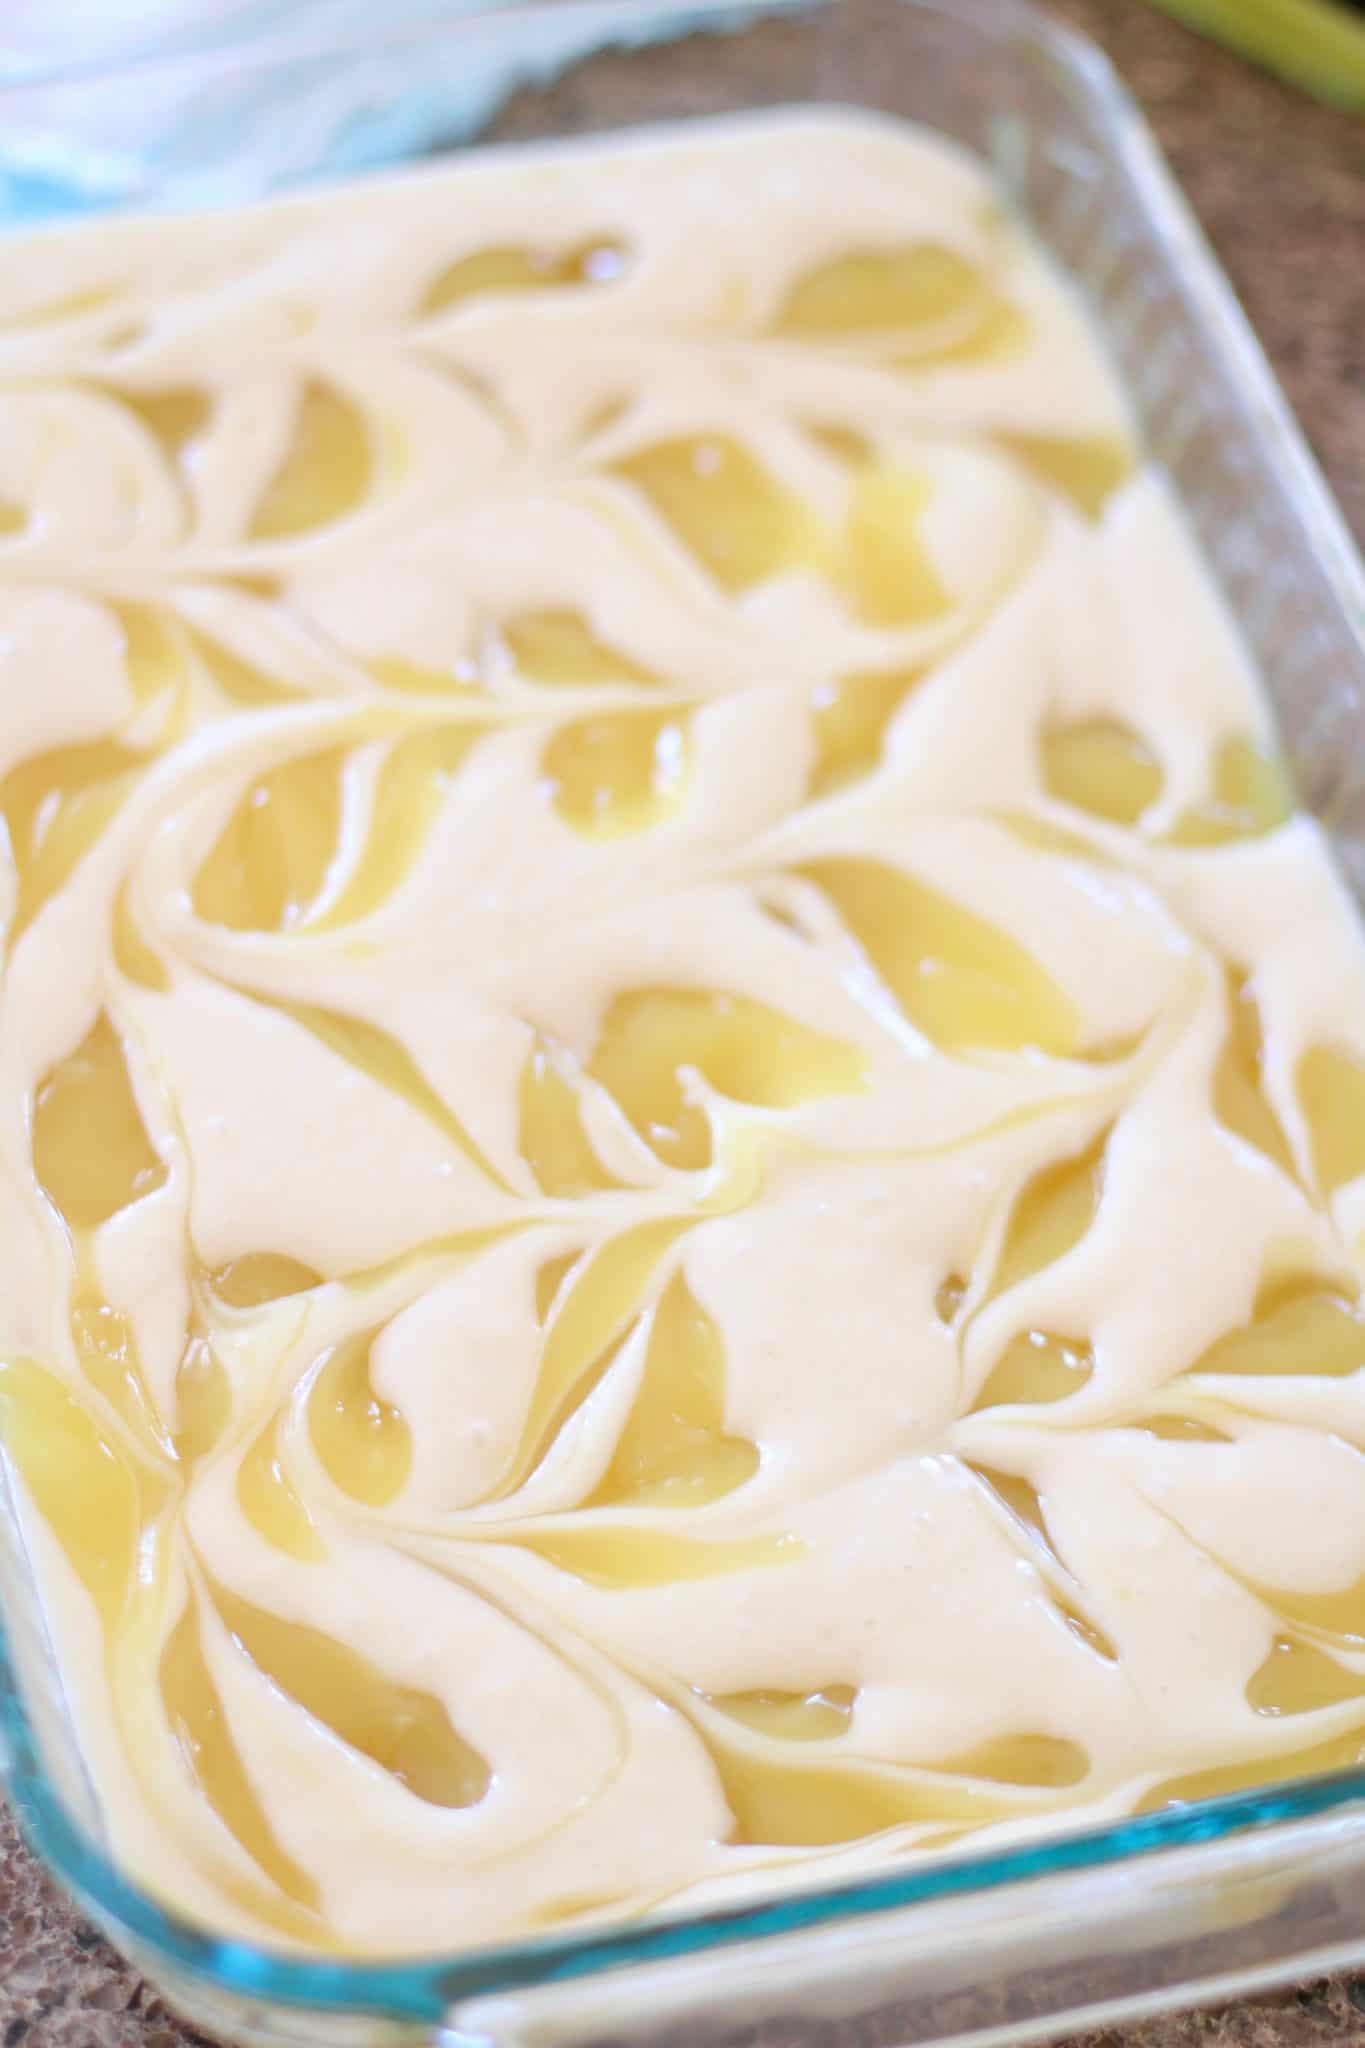 swirled lemon cake before baking in a clear baking dish.